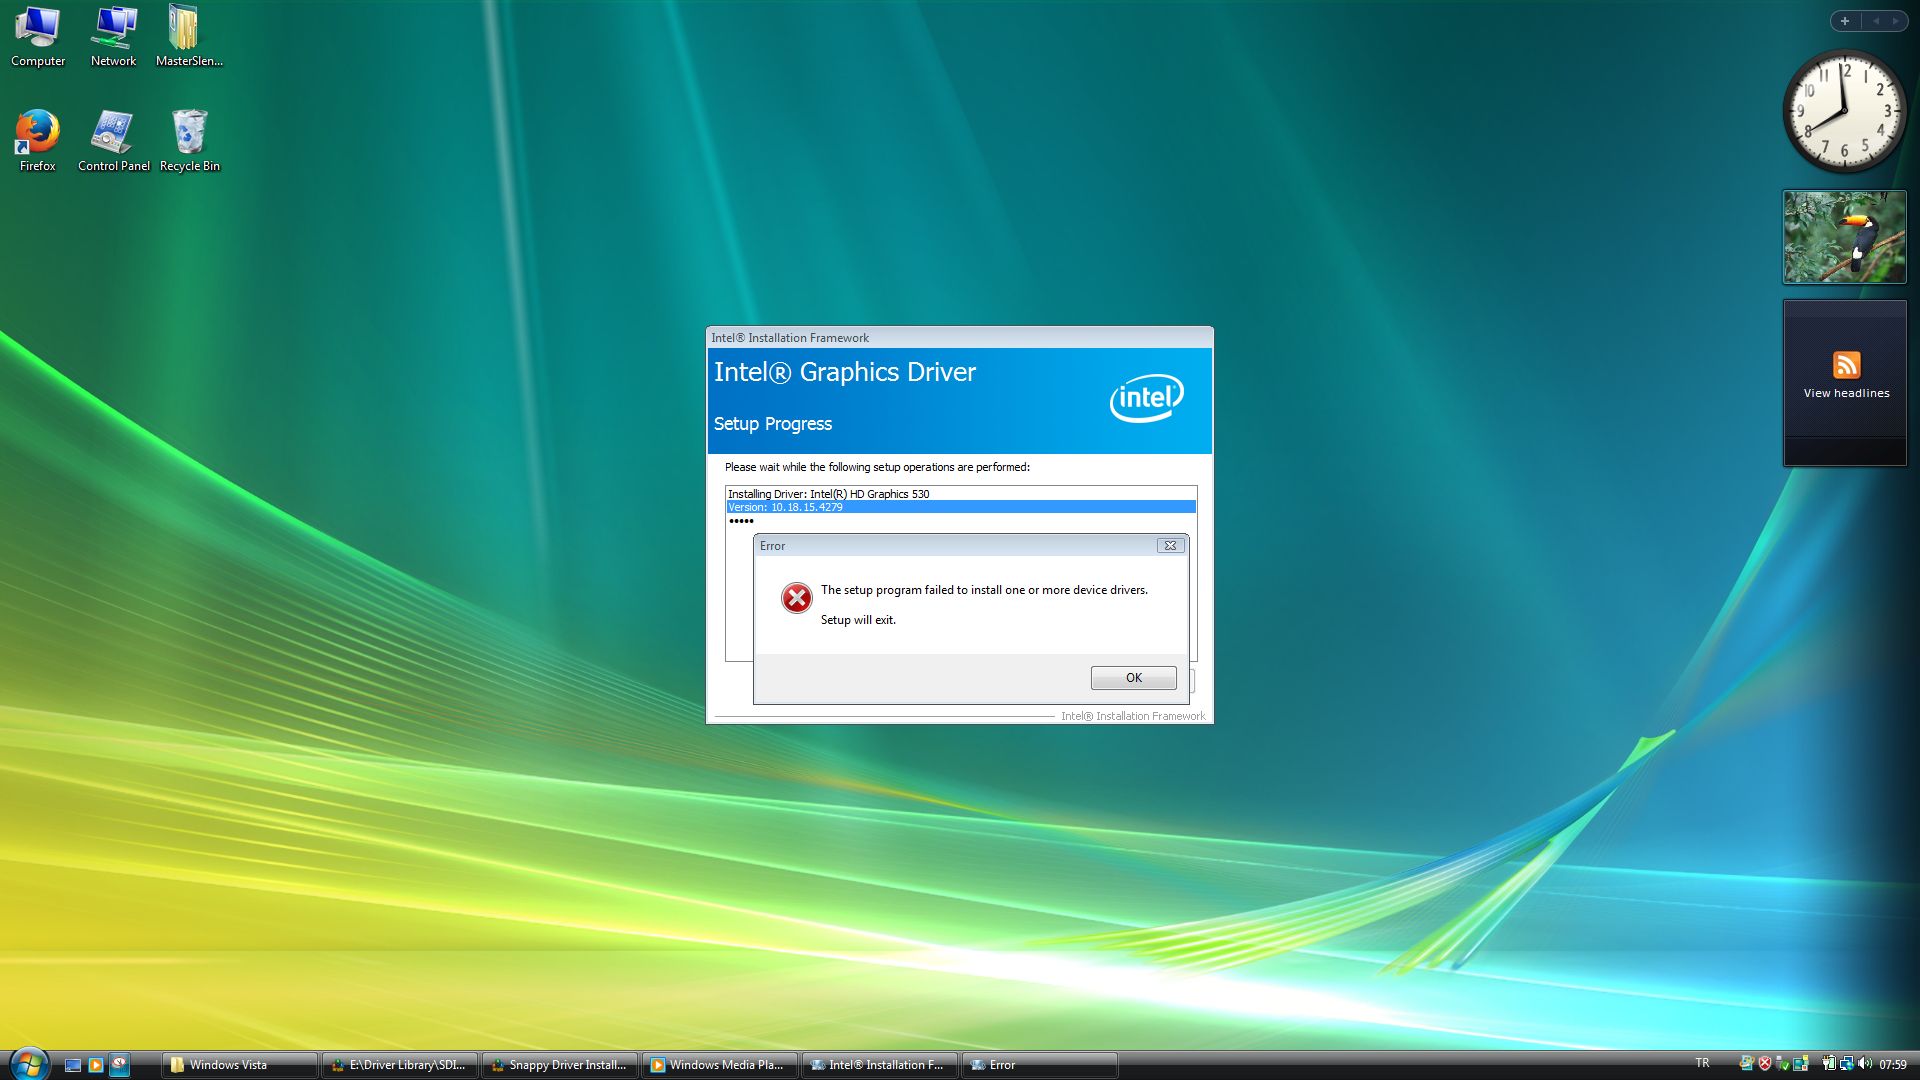 Request] Intel HD Graphics 530 for Windows Vista 64 Bit - Other